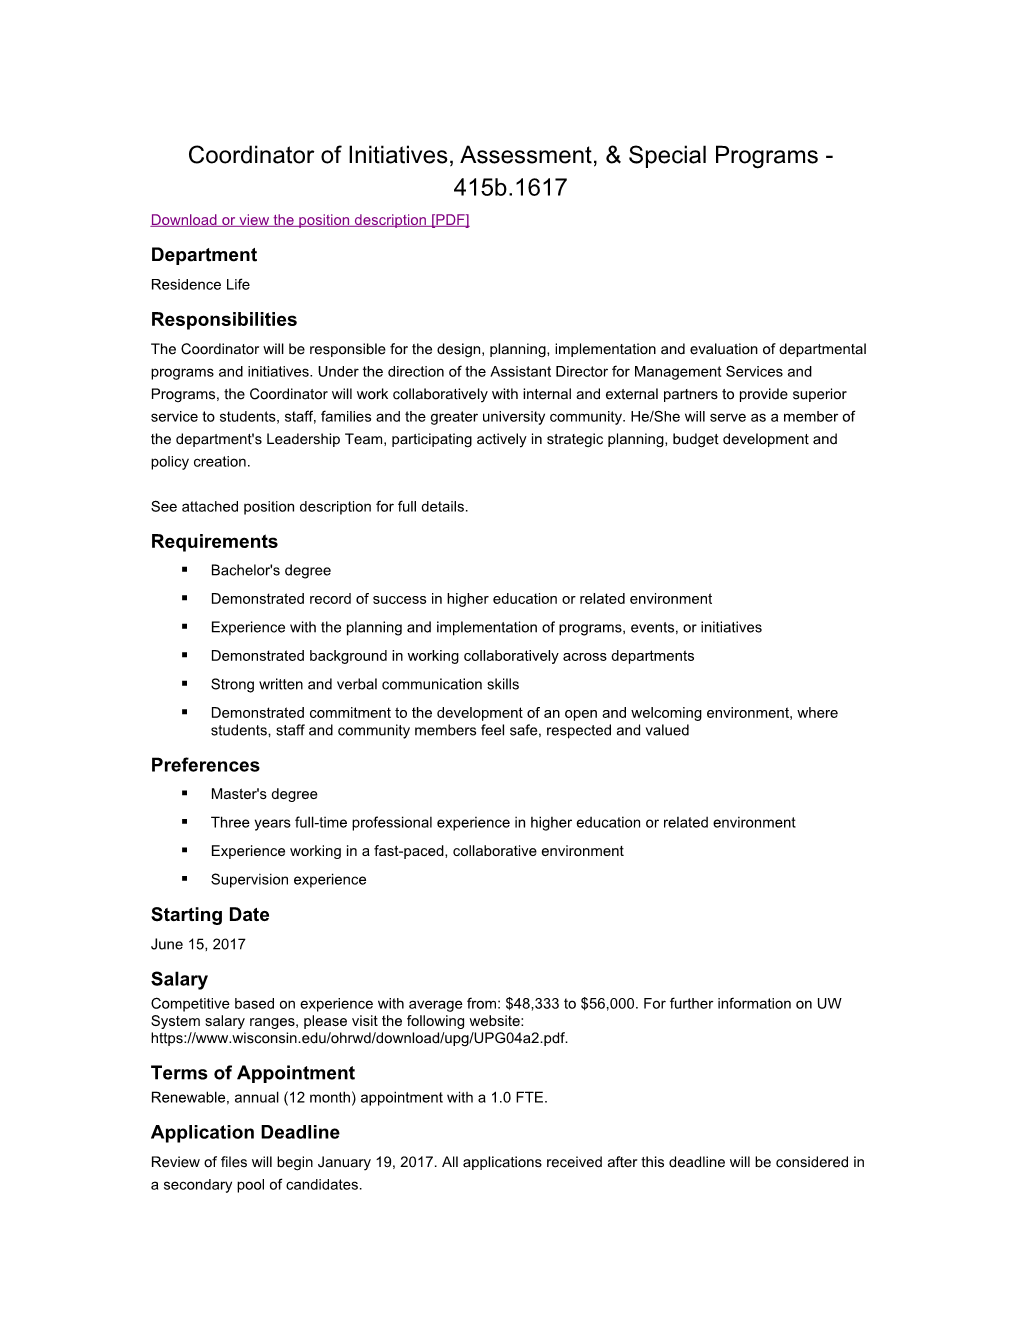 Coordinator of Initiatives, Assessment, & Special Programs - 415B.1617